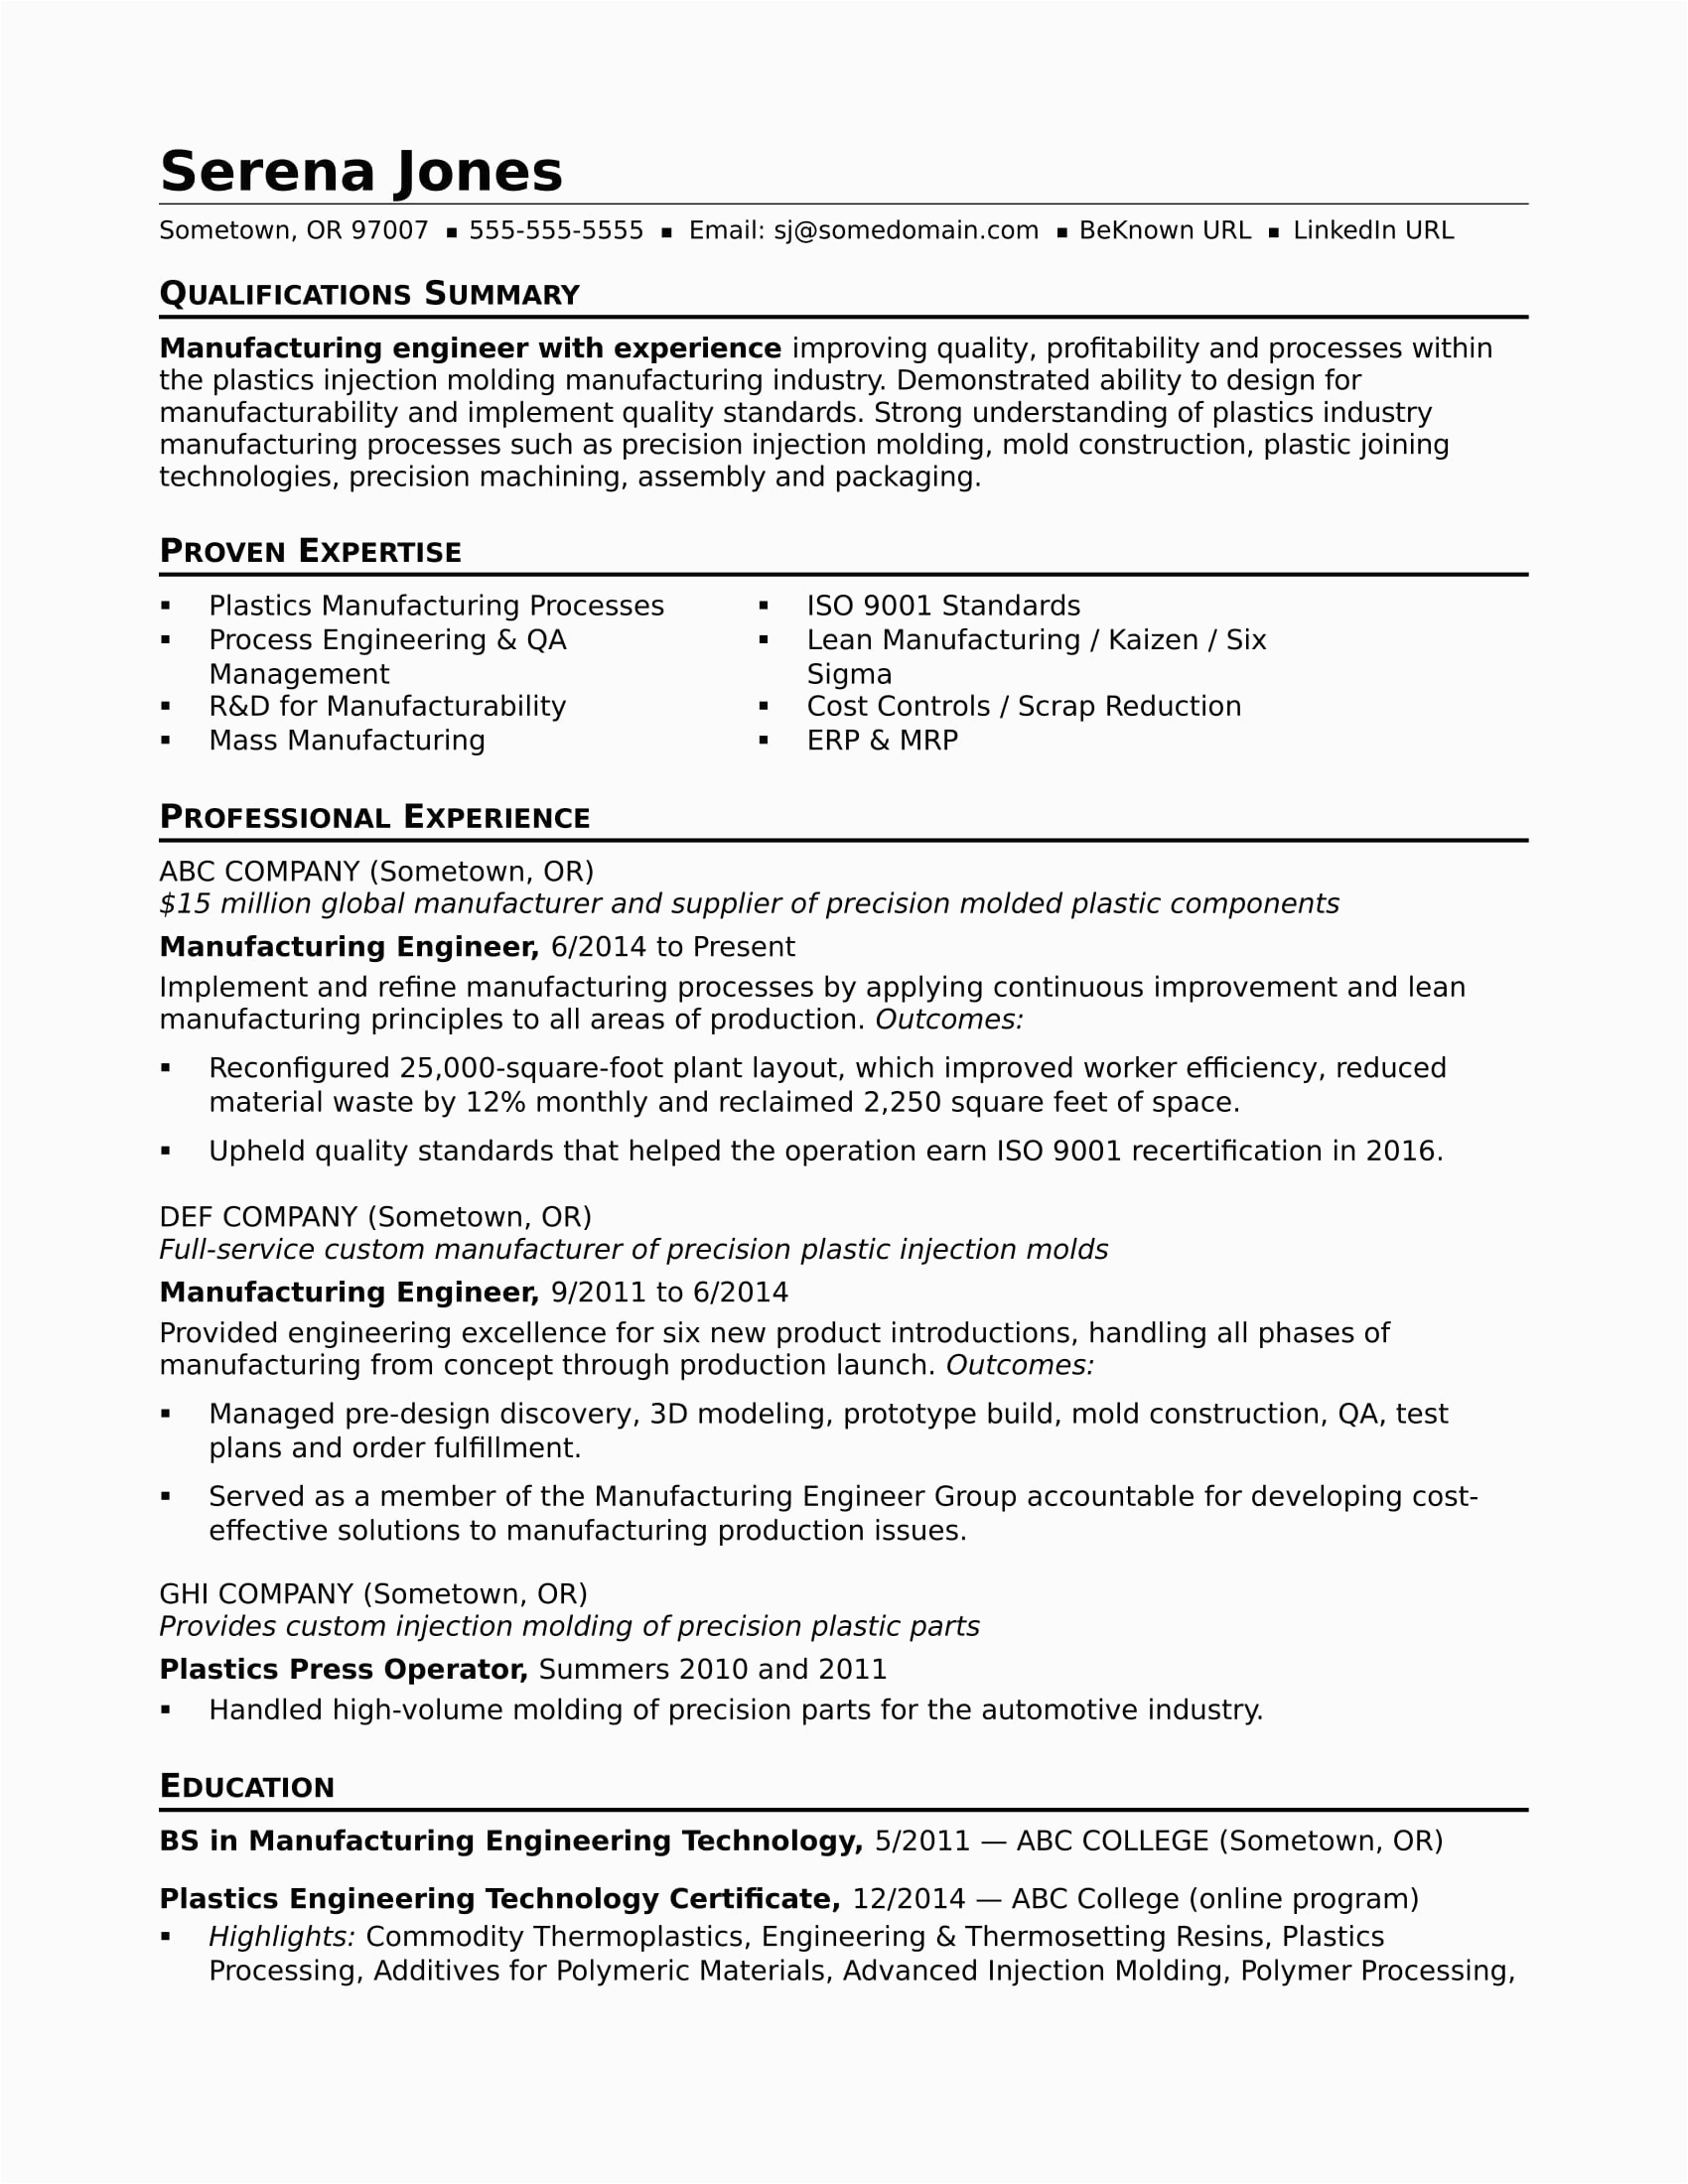 Manufacturing Engineer Mid Career Resume Sample Sample Resume for A Midlevel Manufacturing Engineer